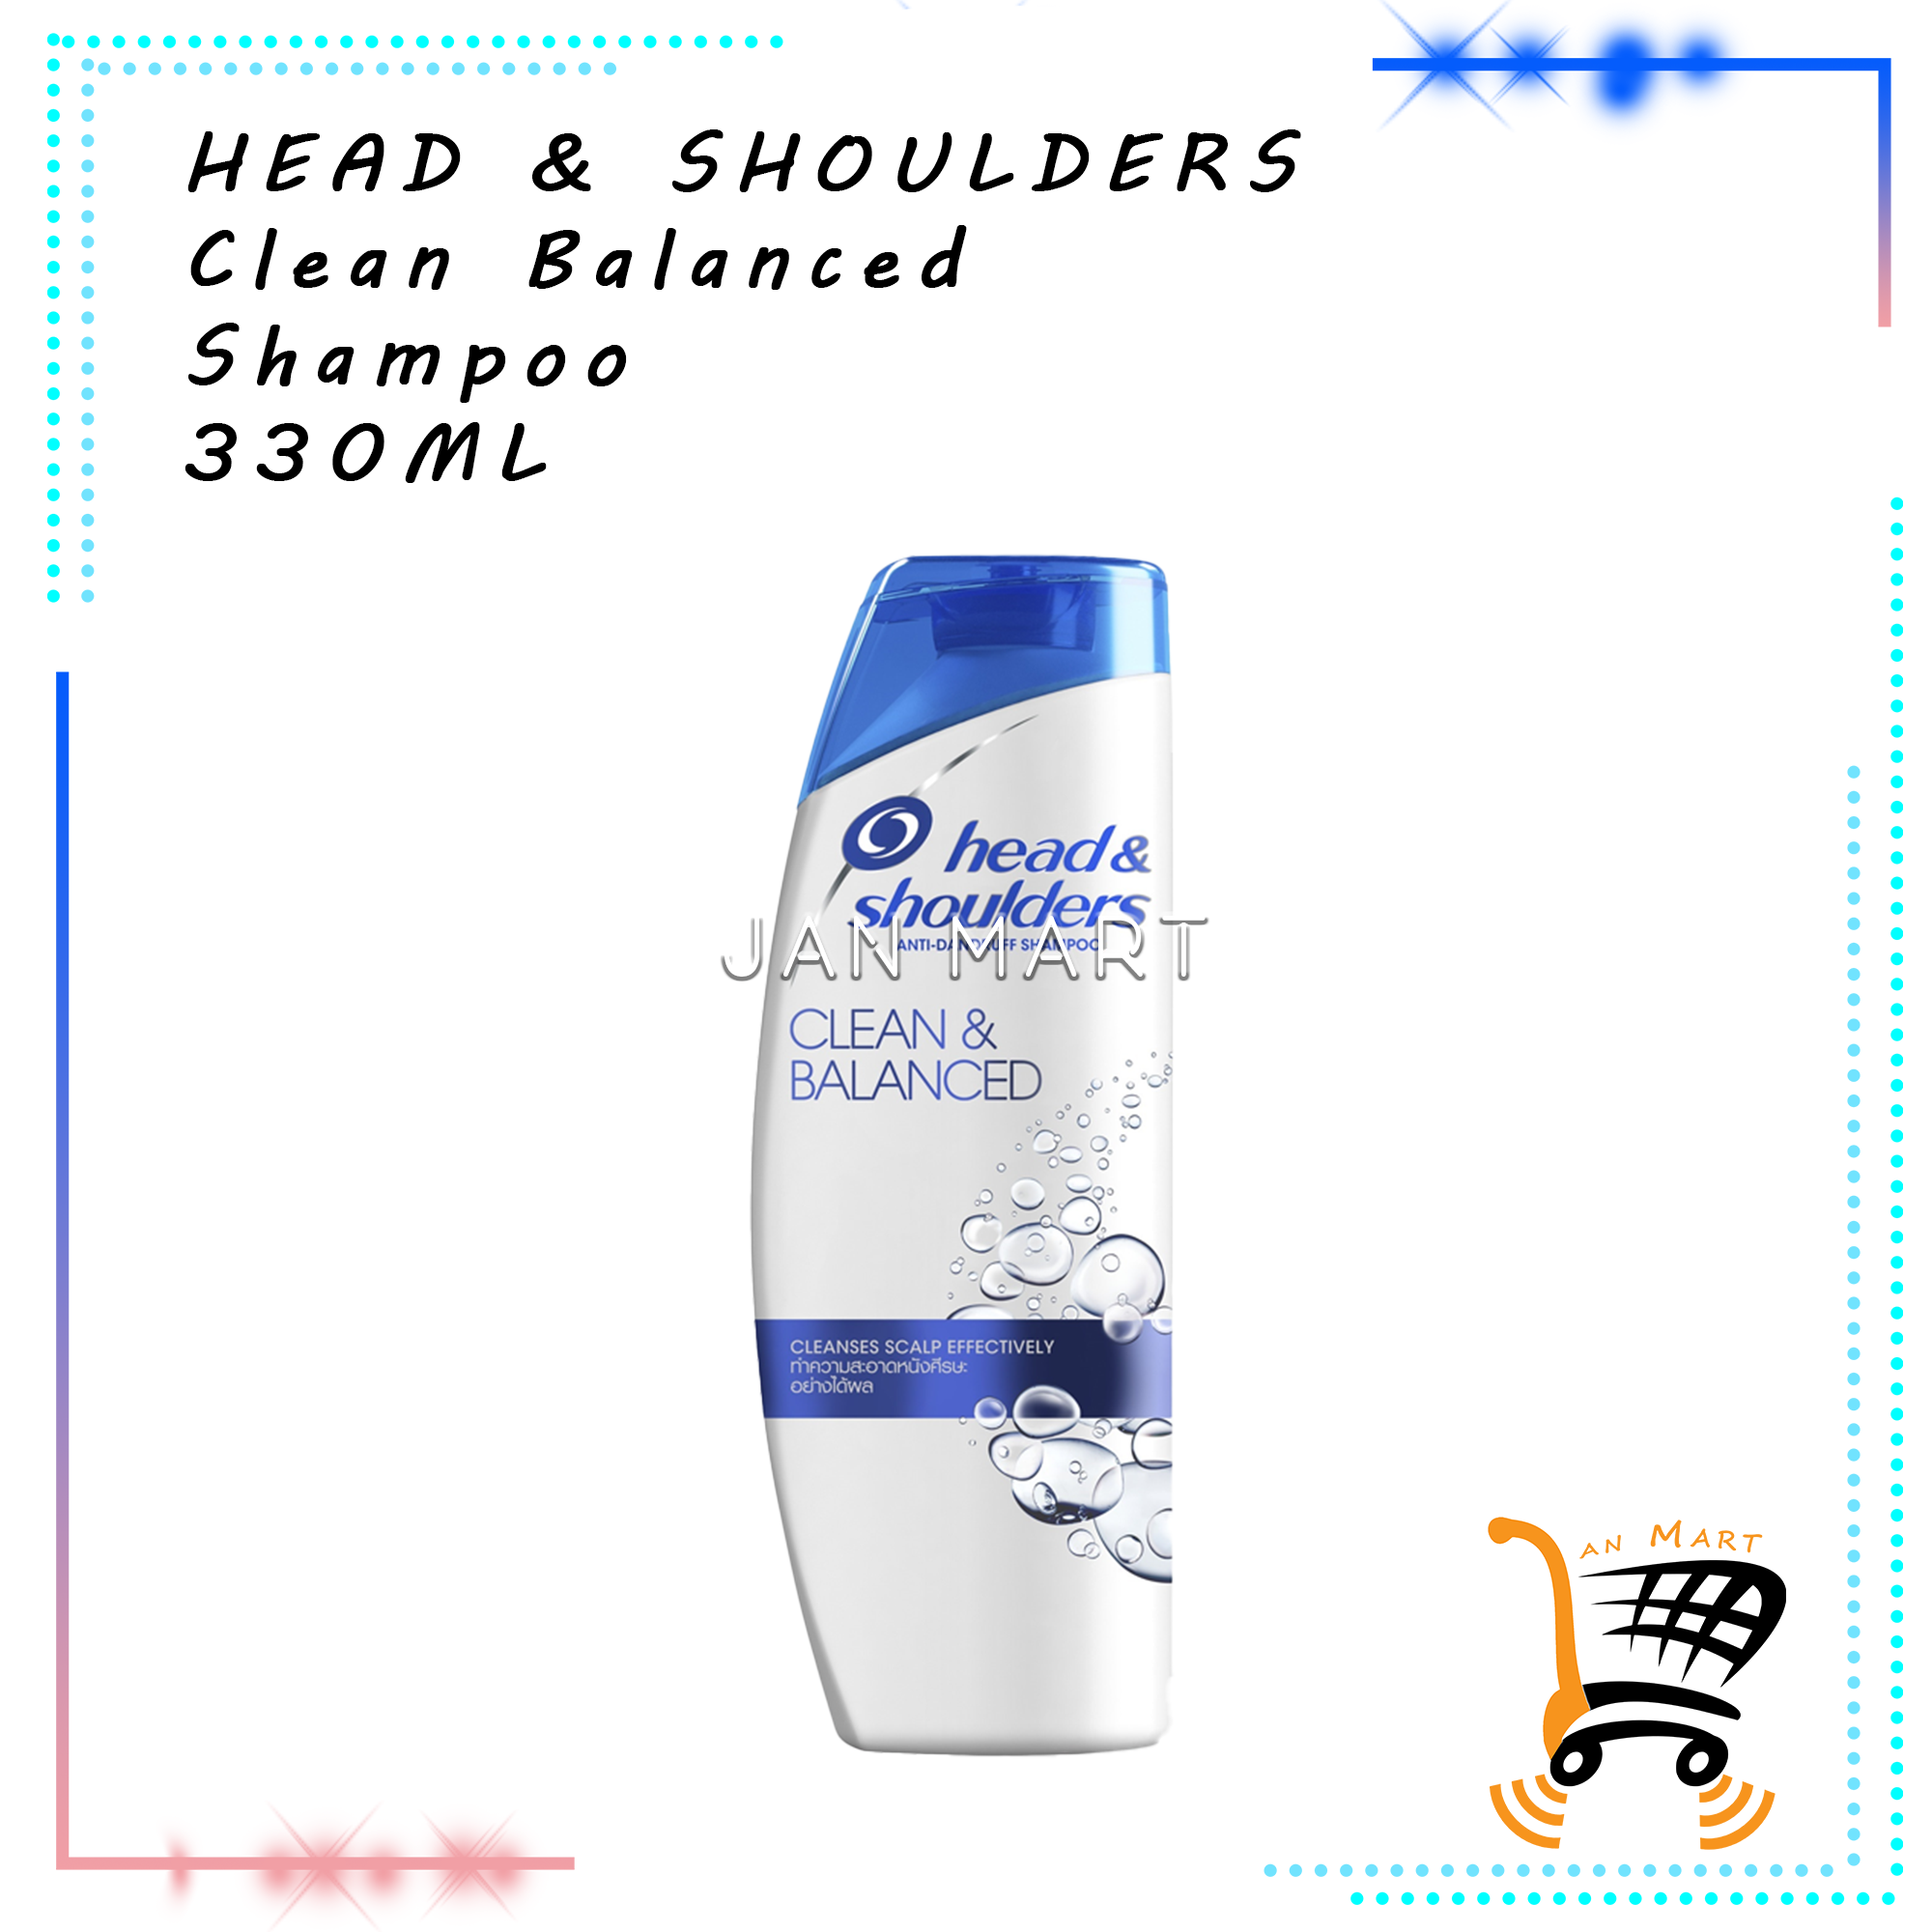 HEAD & SHOULDERS Shampoo 330ML